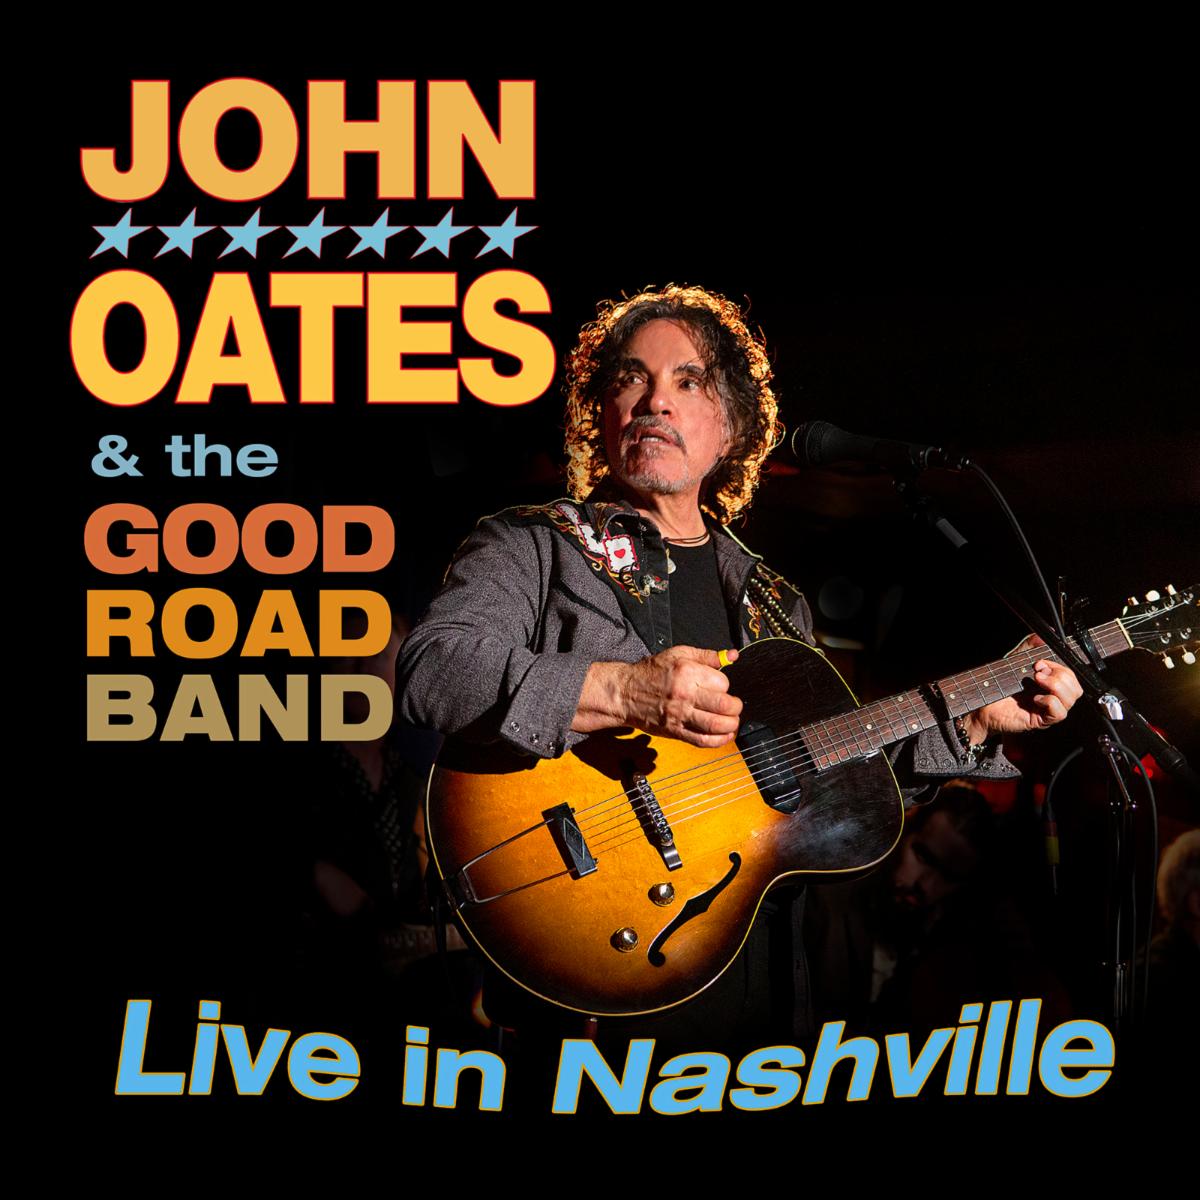 John Oates & The Good Road Band ‘Live In Nashville’ Set For September 18th Release